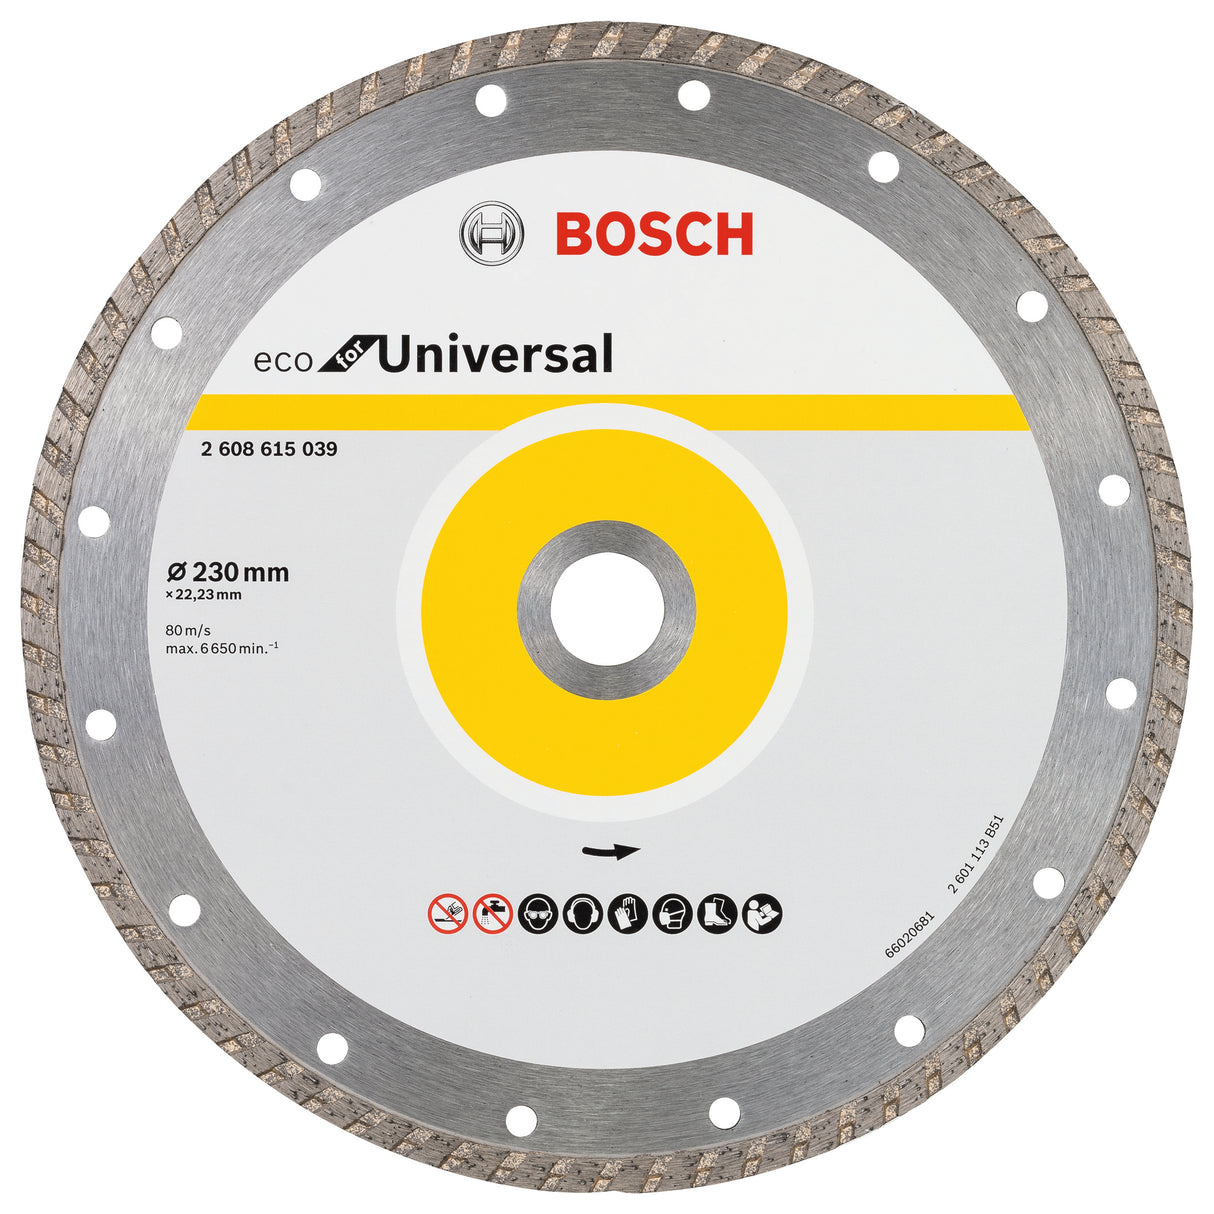 Bosch Professional Diamond Cutting Disc ECO - Universal, 230x22.23x3.0x7